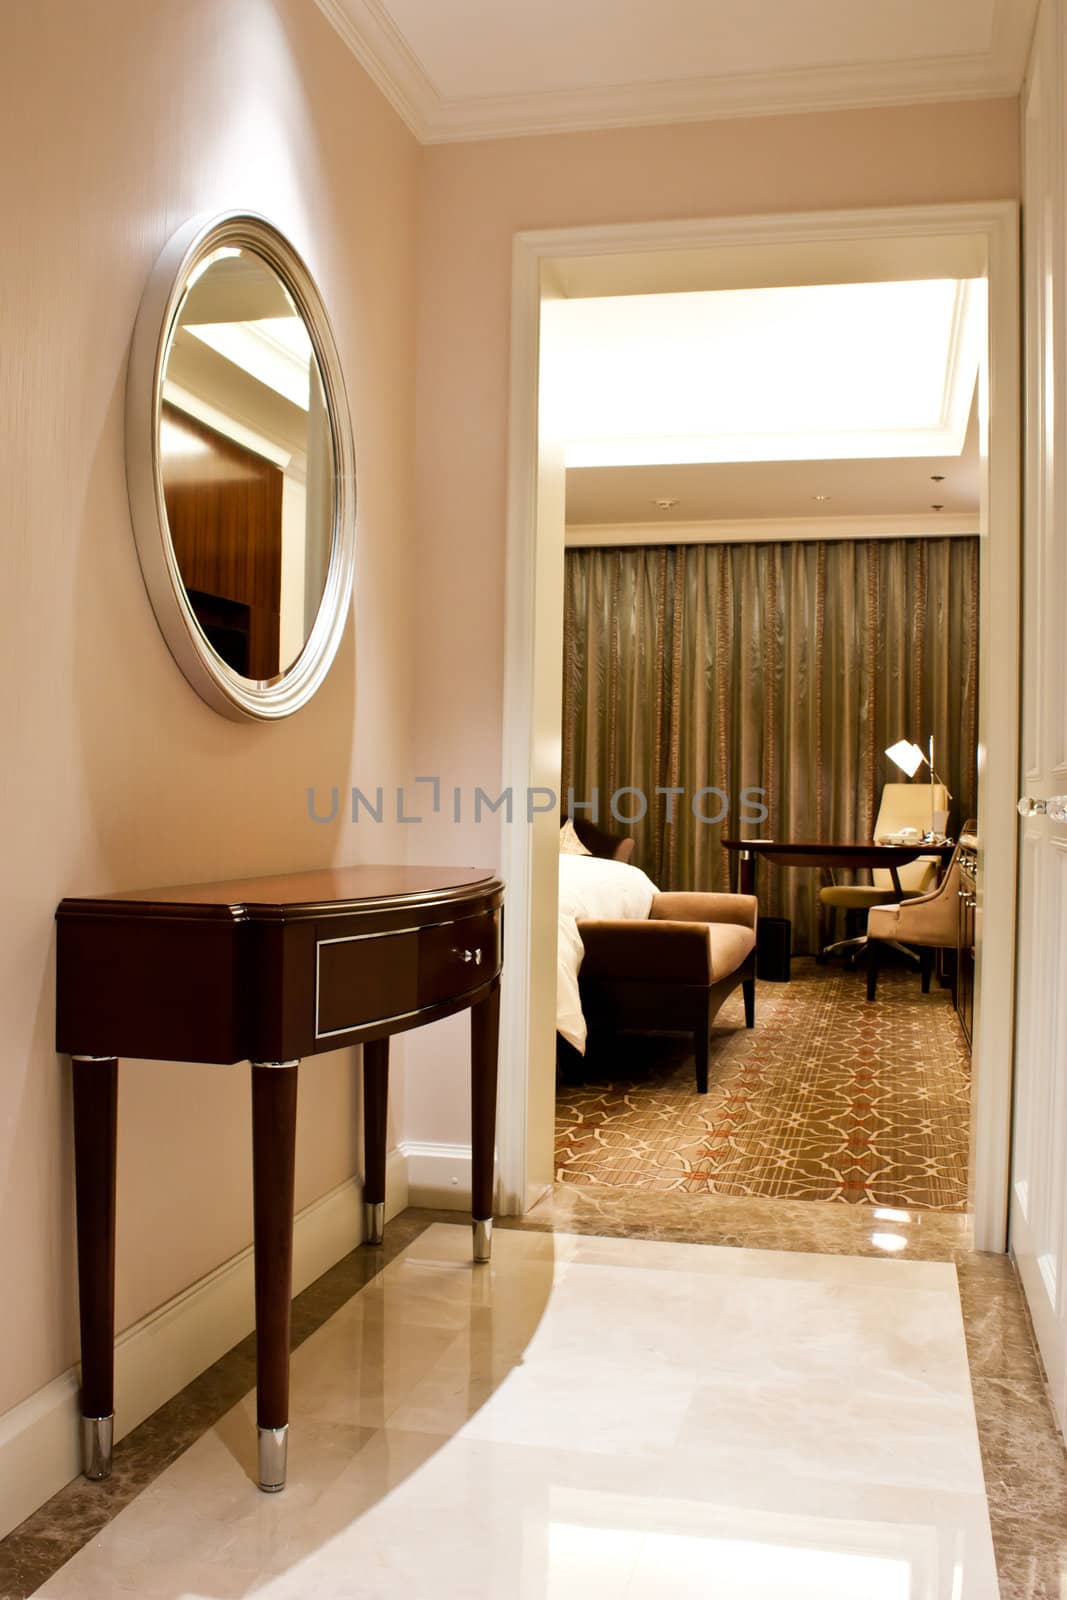 Luxury hotel bedroom by Perseomedusa